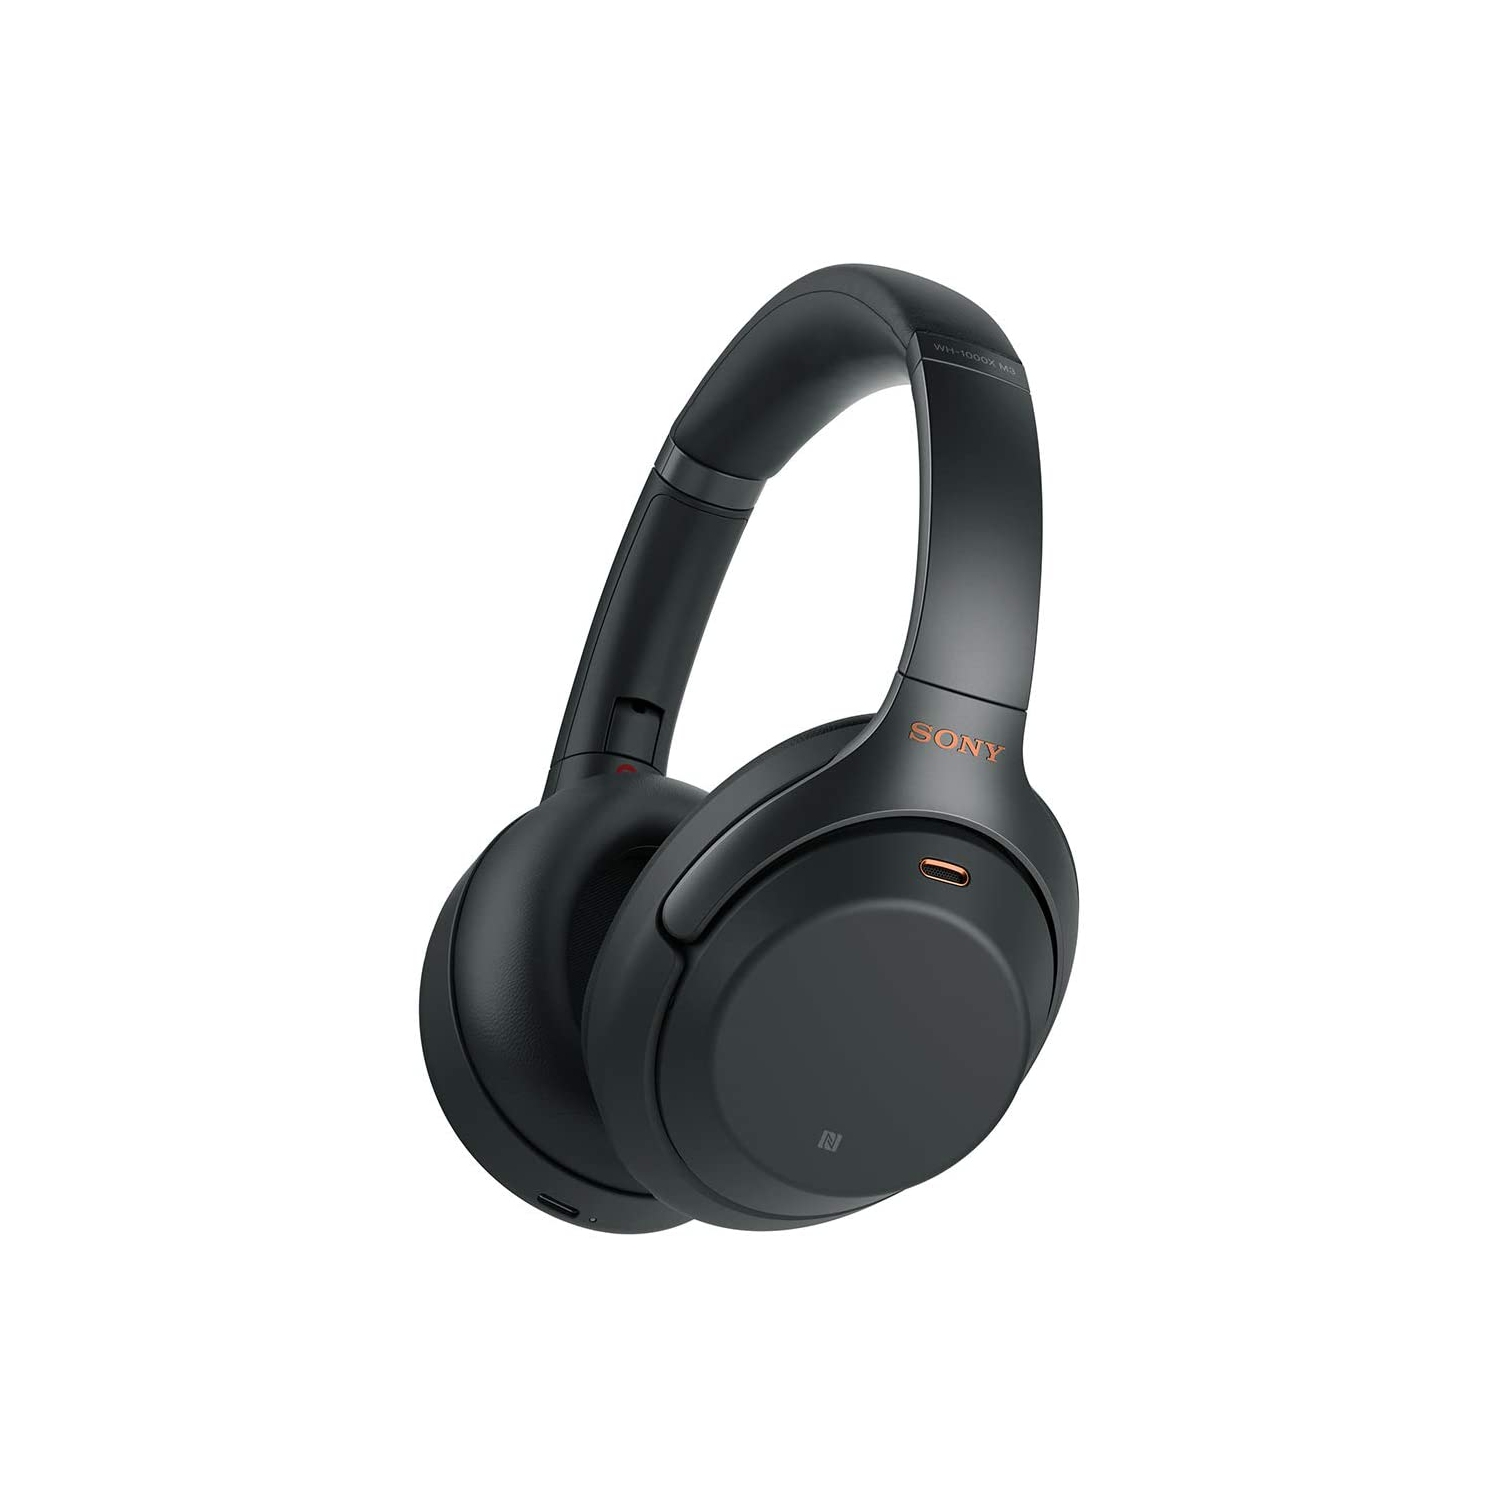 Sony WH-1000XM3 Wireless Noise-Canceling Over-Ear Headphones BLACK - US version/ seller provided warranty